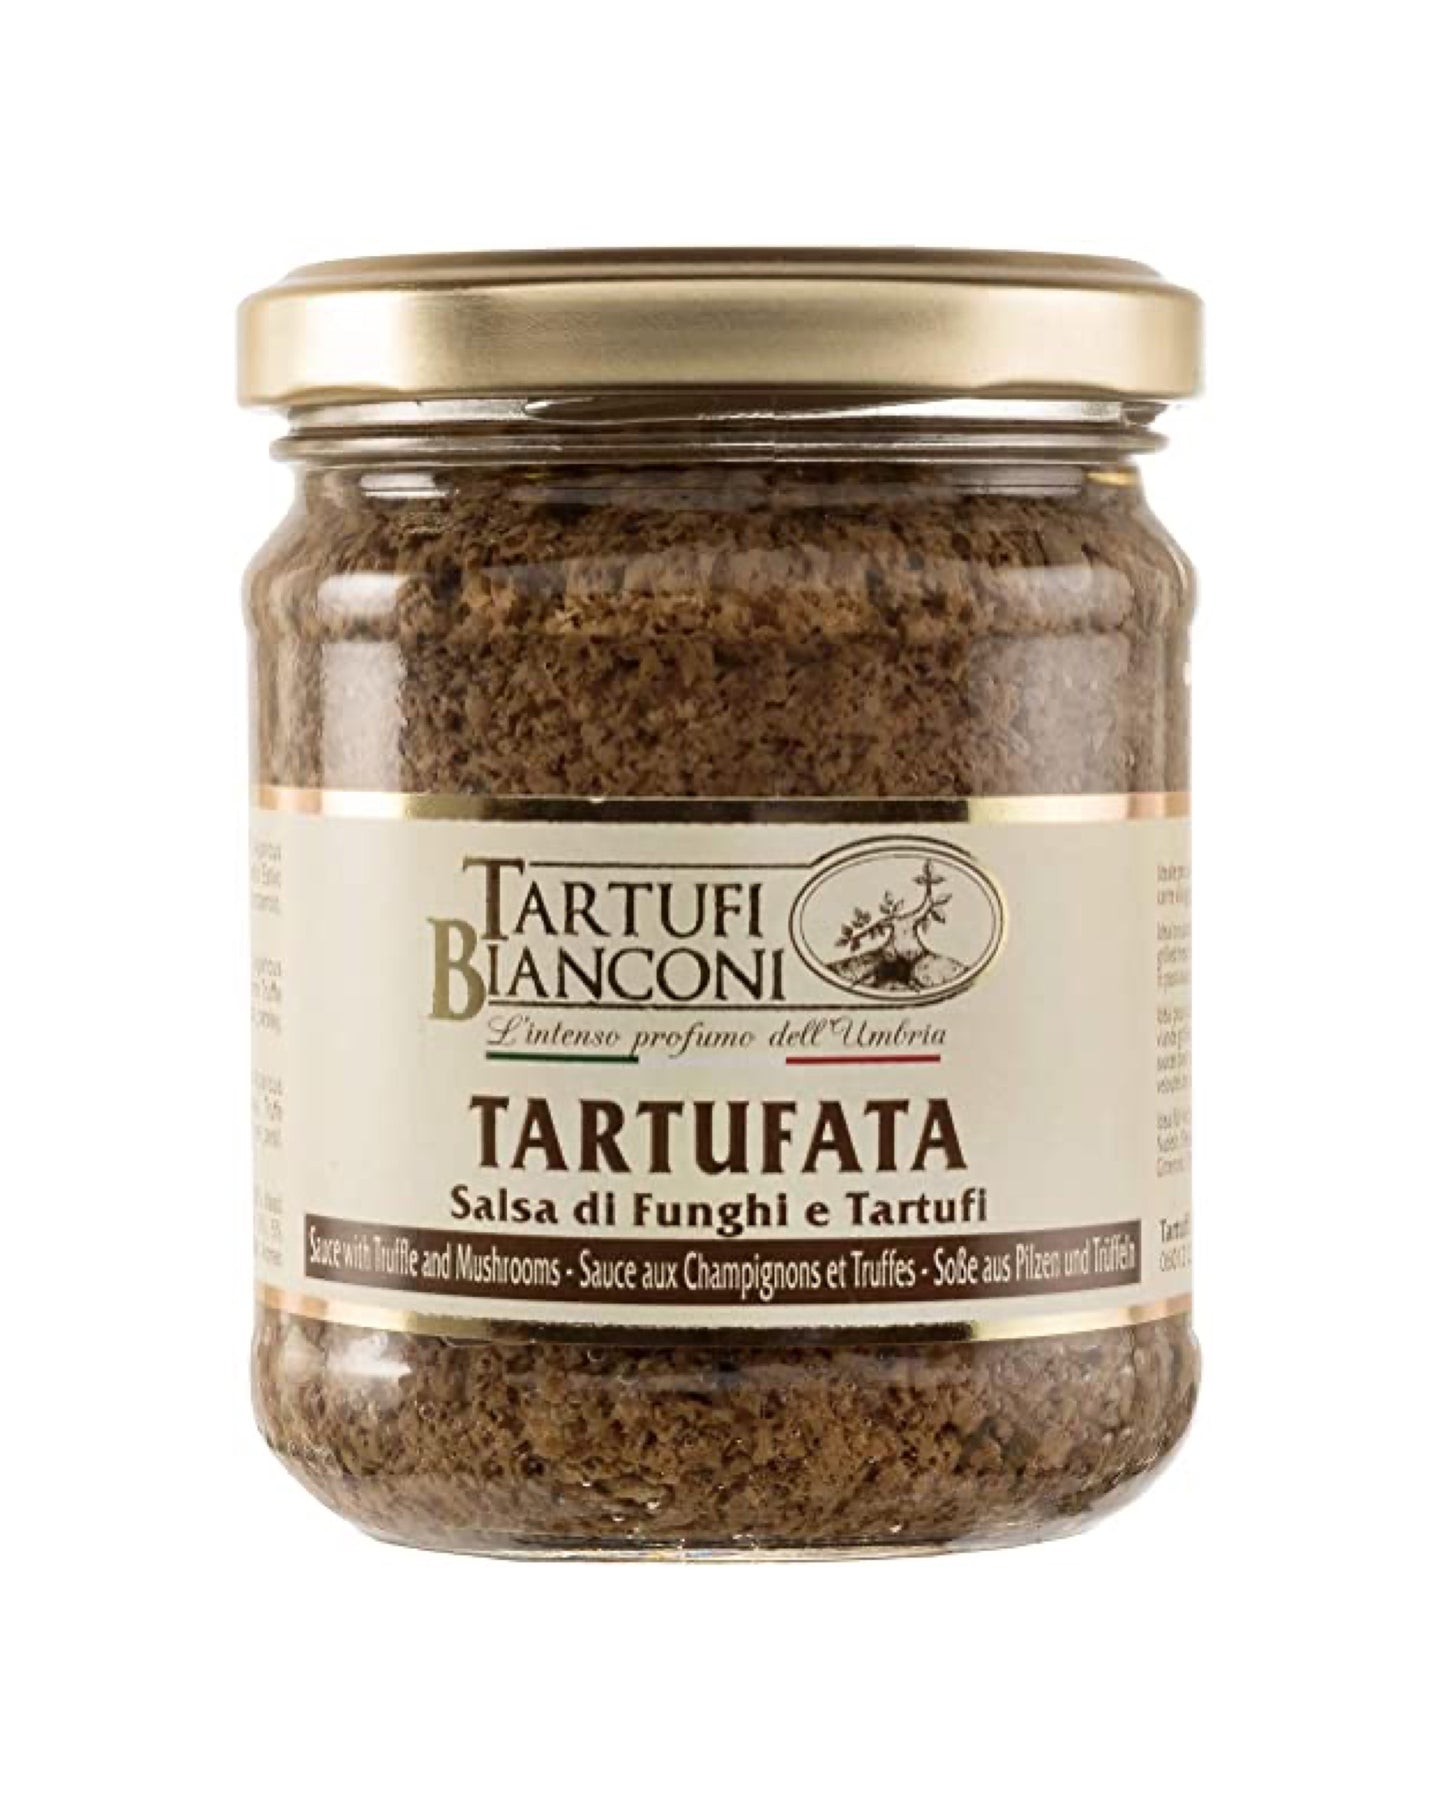 Tartufi Bianconi Tartufata (Mushrooms and Truffles Sauce), 80g